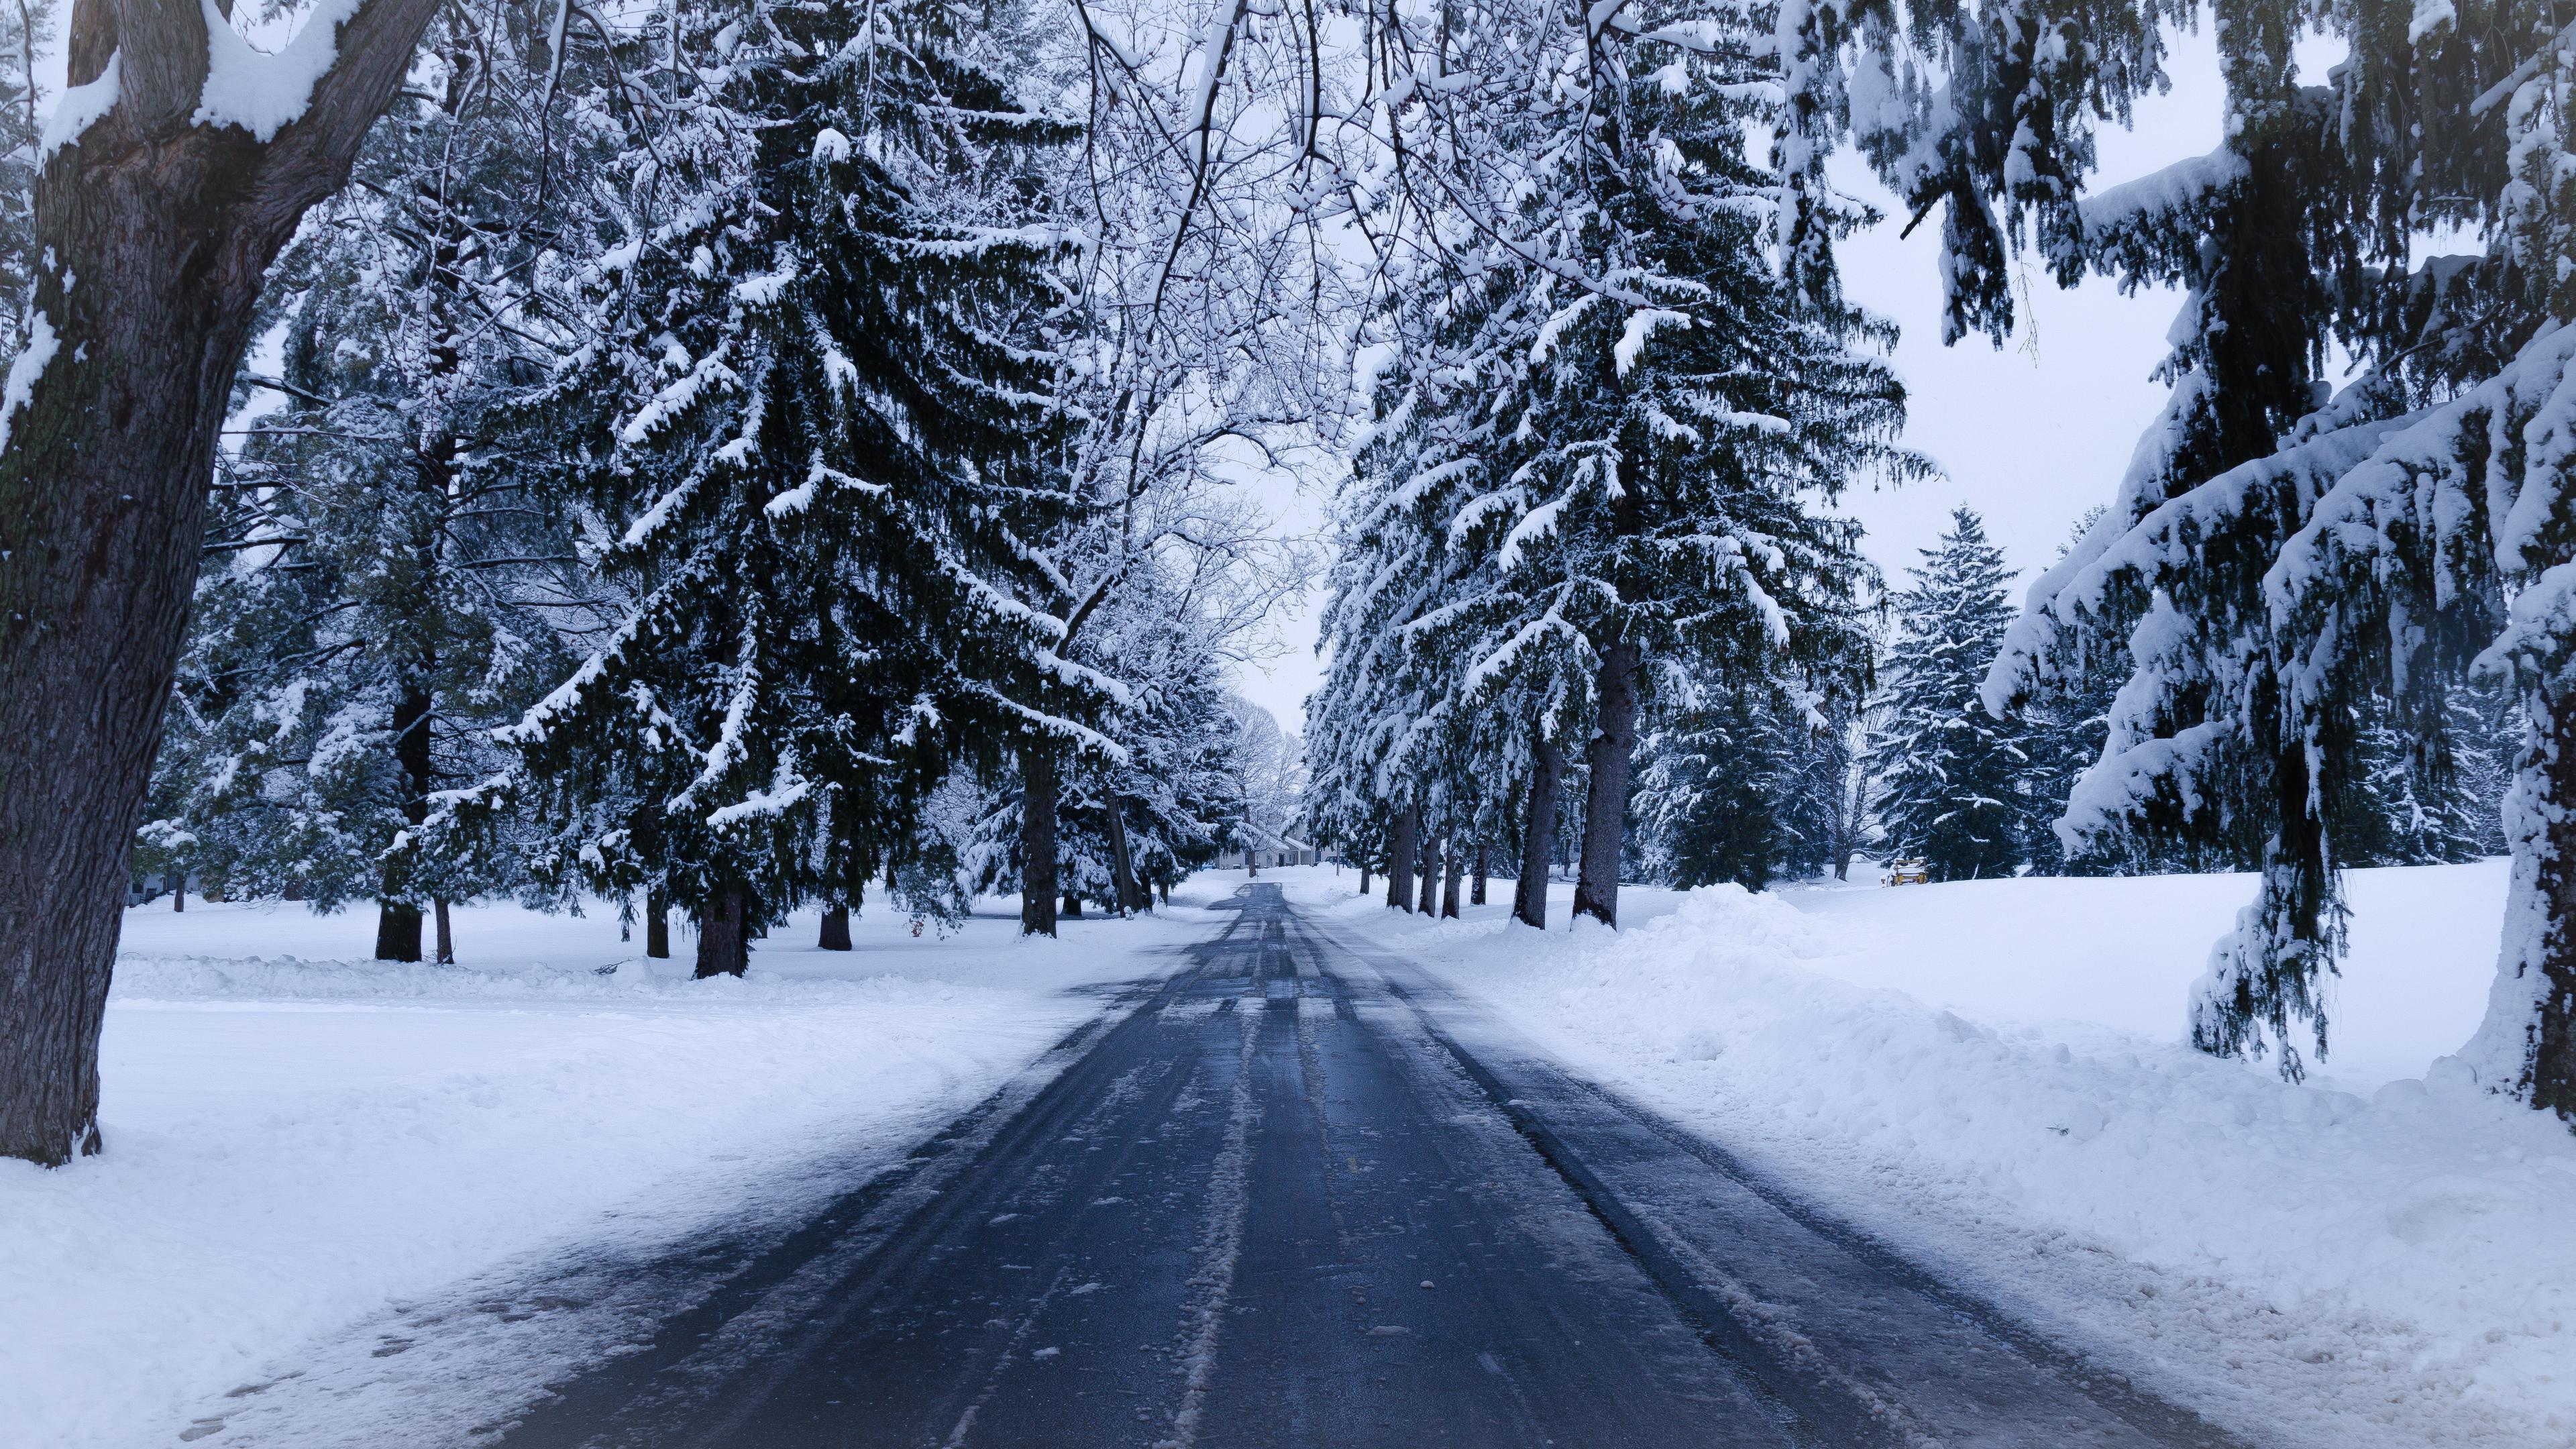 Download wallpaper 3840x2160 winter, road, snow, trees